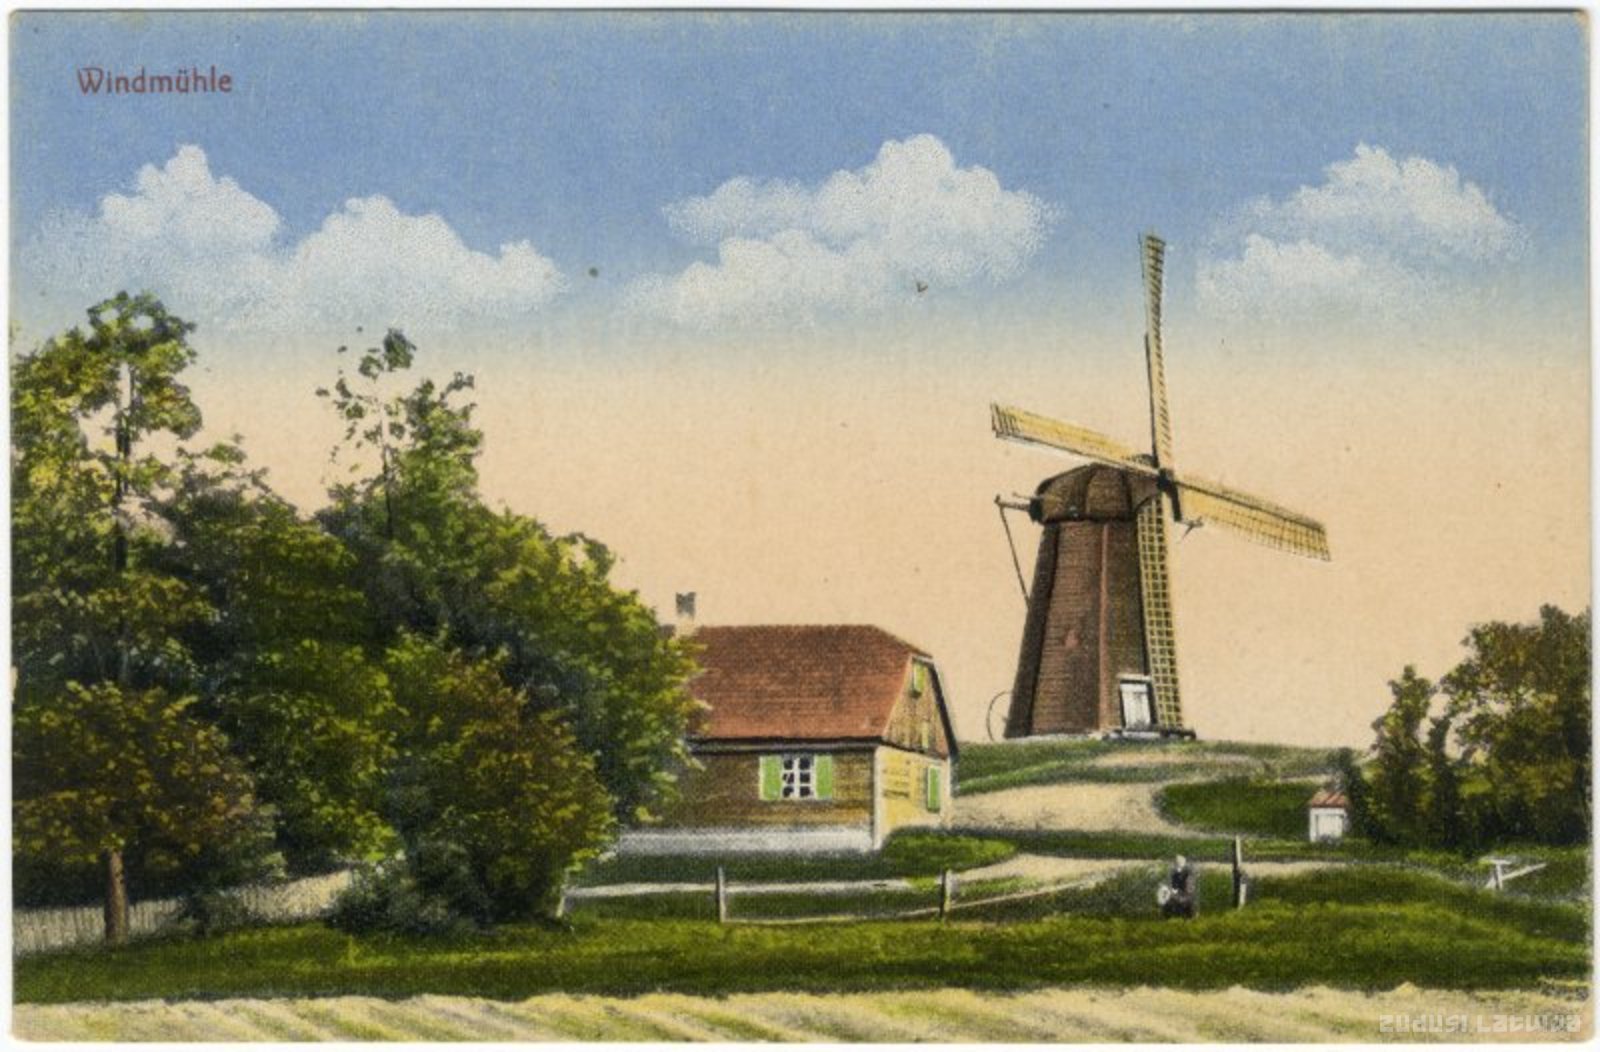 Windmühle, Lighting County. Windscreens